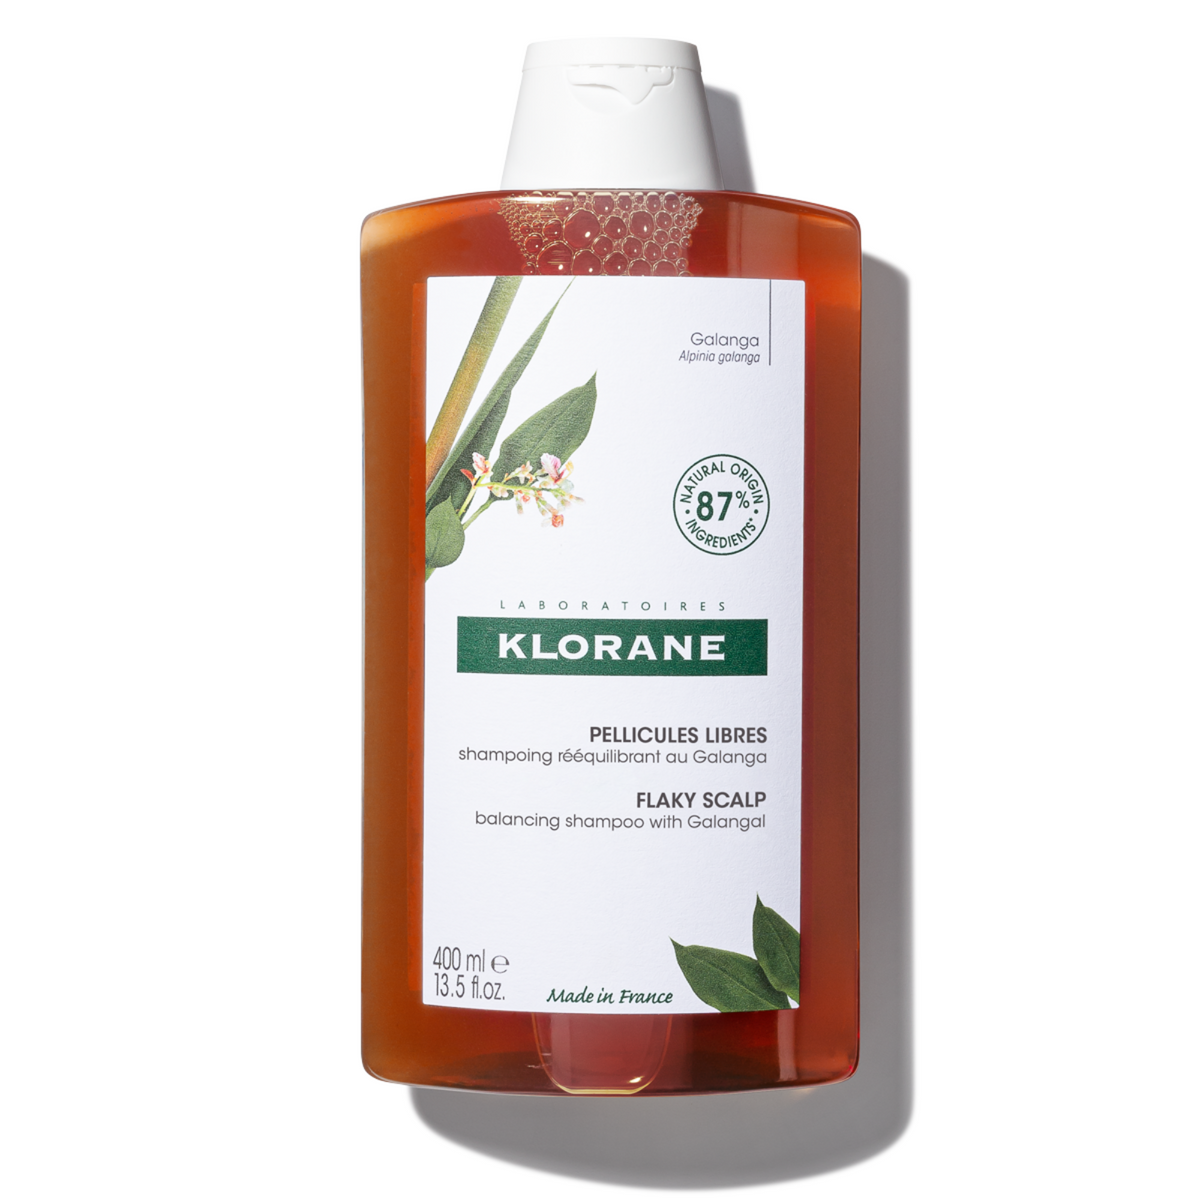 Primary Image of Klorane Galangal Flaky Scalp Shampoo (13.5 fl oz) 